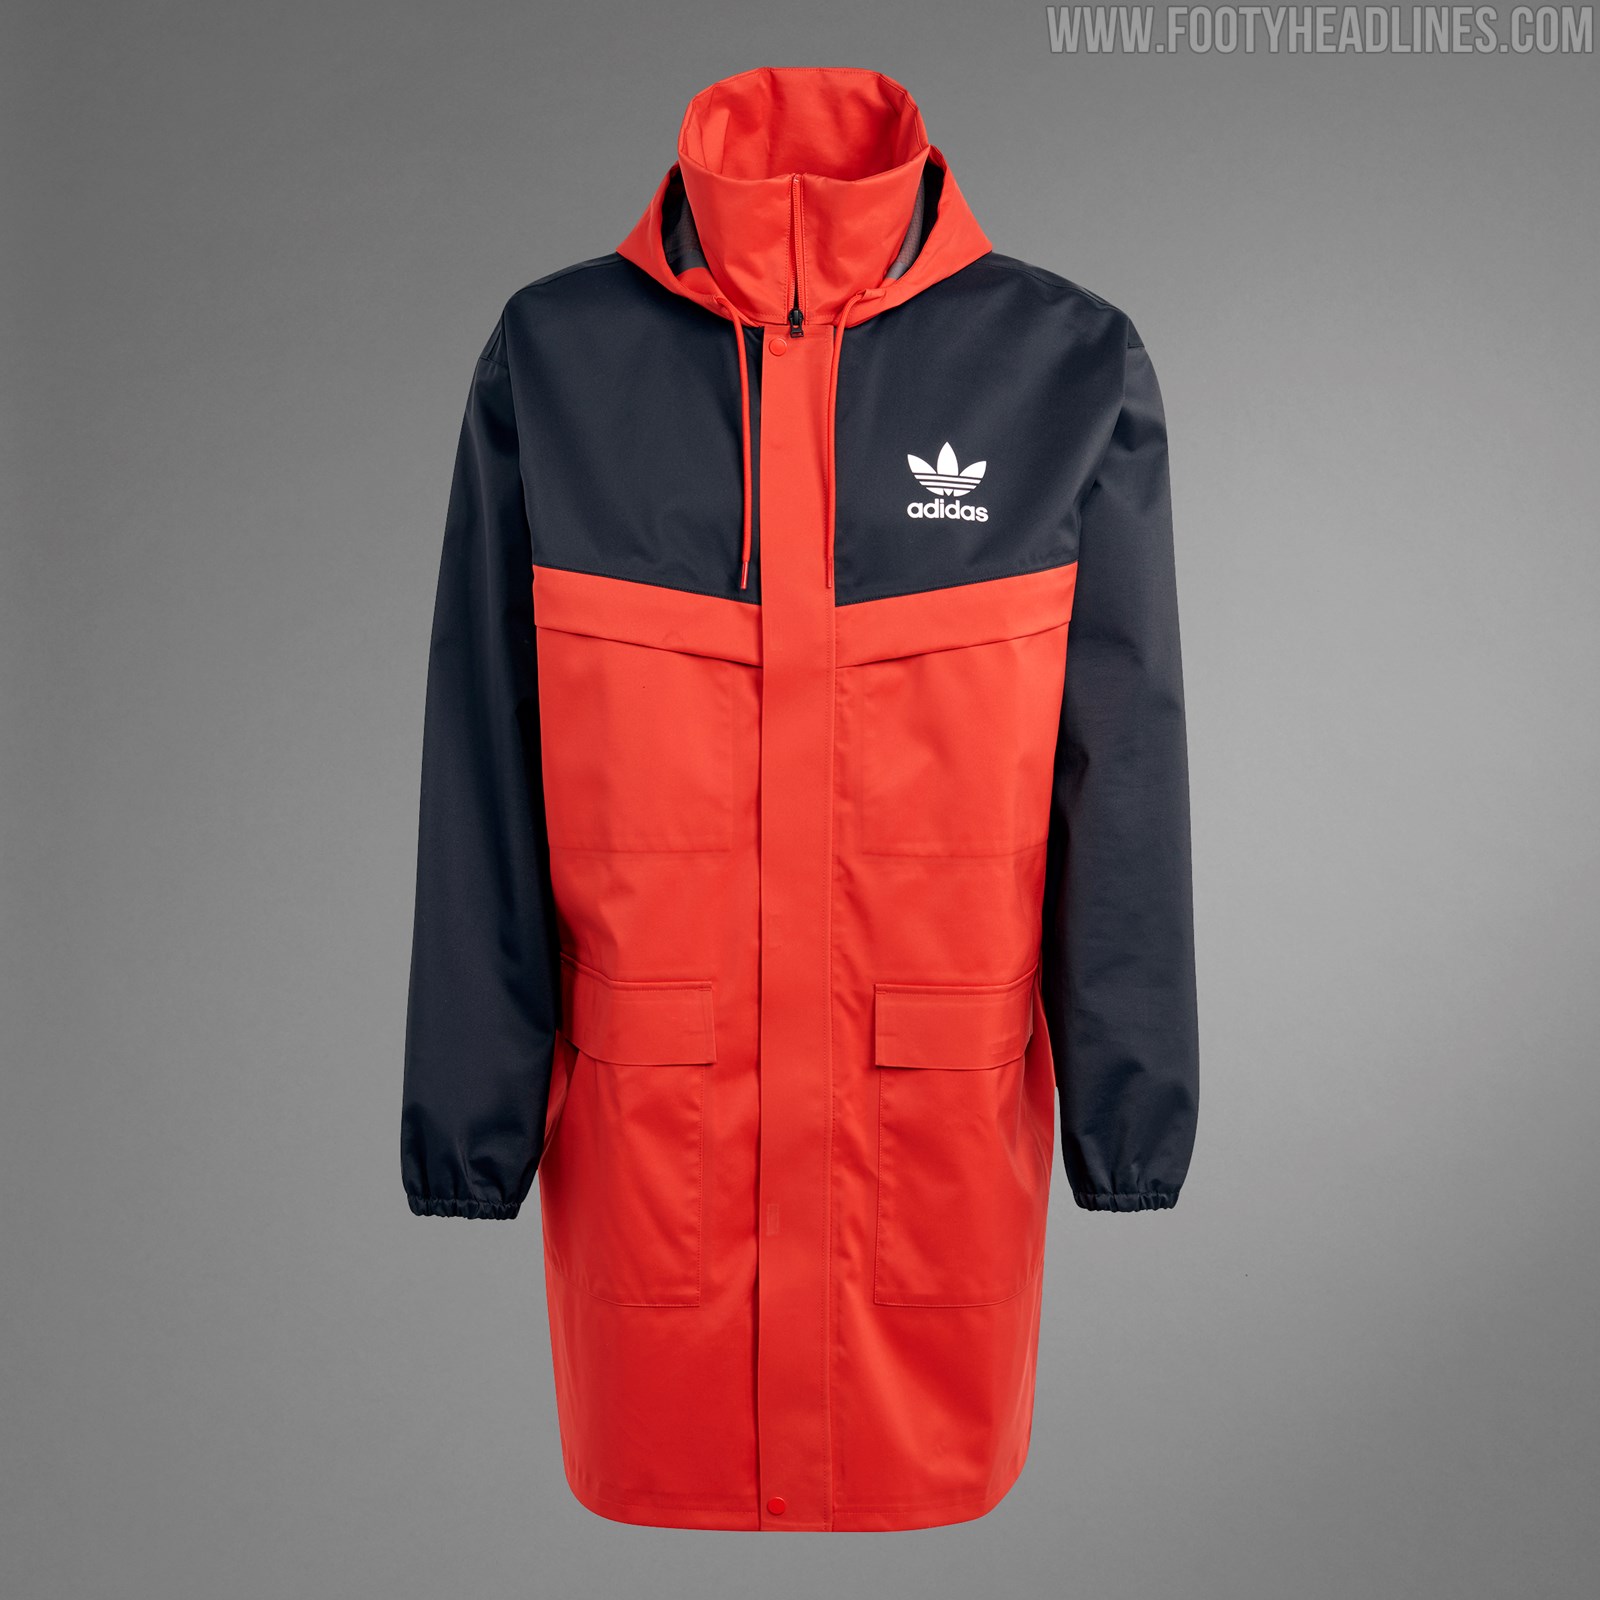 Adidas Manchester United 1988-1990 Third Kit Remake + Full